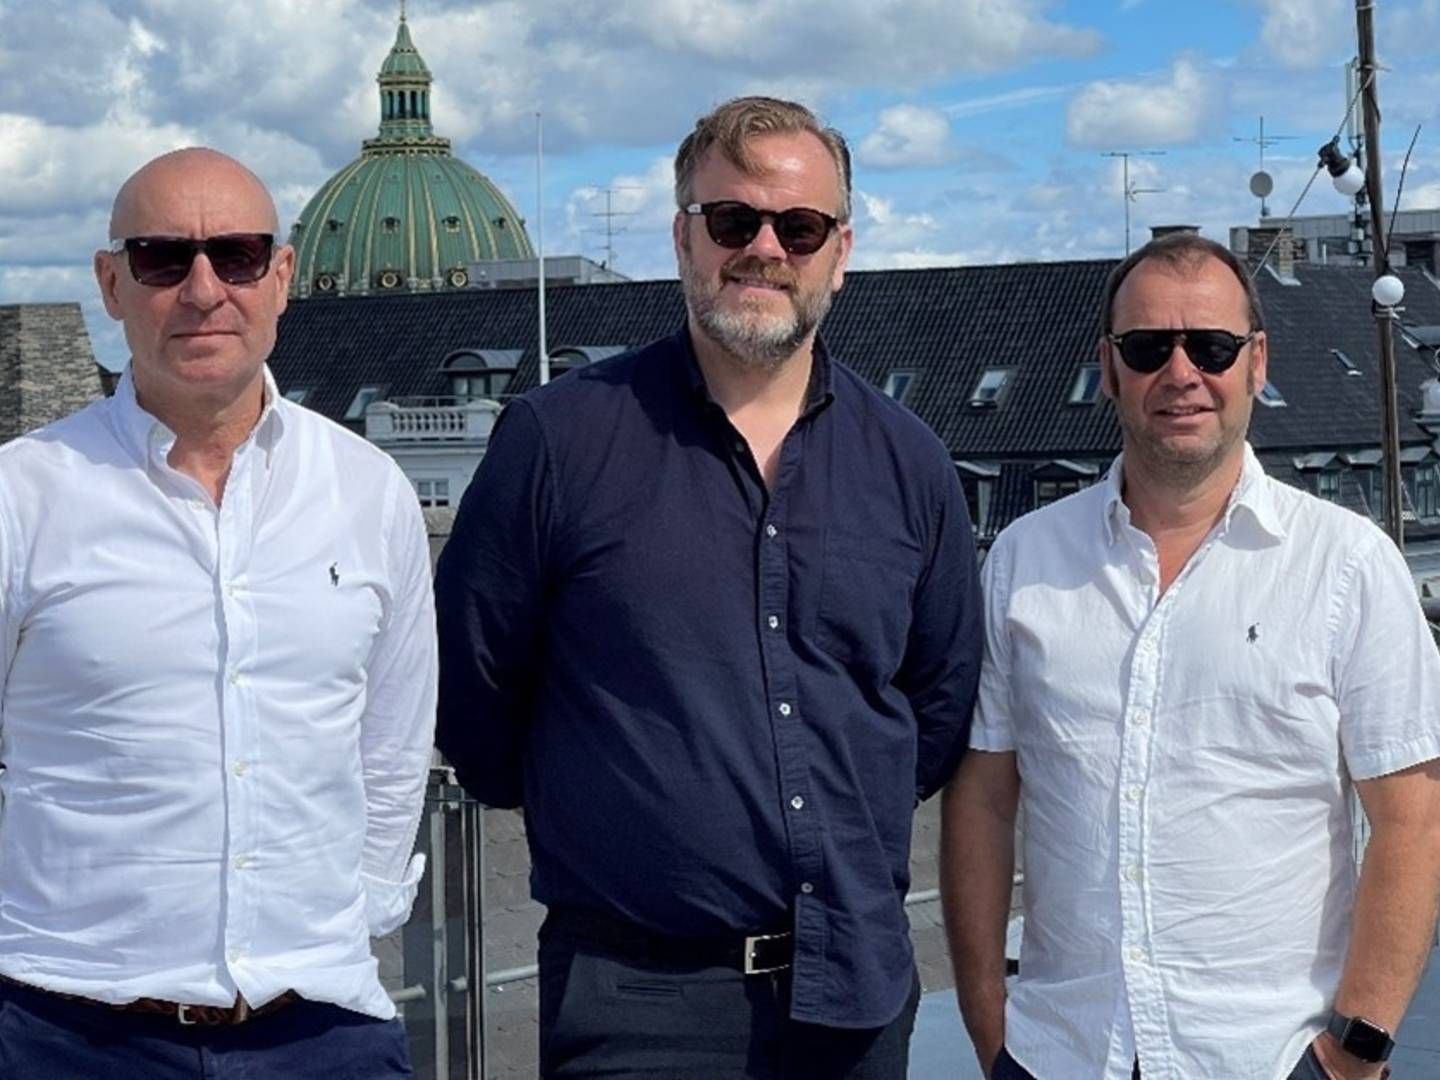 Fra venstre: Direktørerne i Scanbox, Kim William Beich og Thor Sigurjonsson, og direktør i Supersonic, Lars Mitch Fischermann | Foto: Pressfoto / Scanbox Entertainment